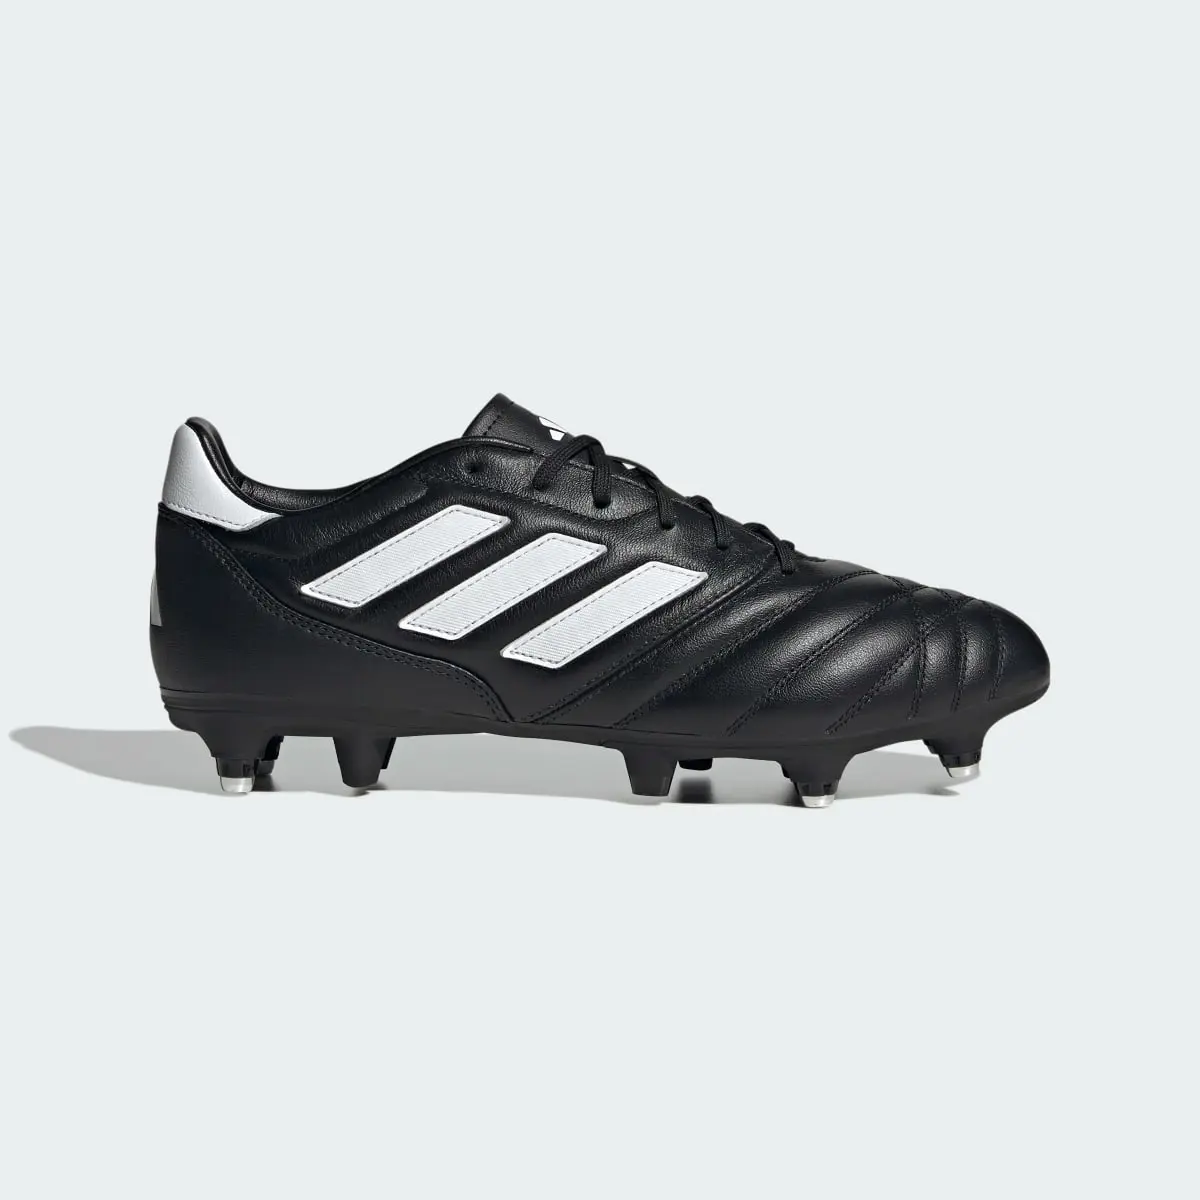 Adidas Copa Gloro Soft Ground Boots. 2